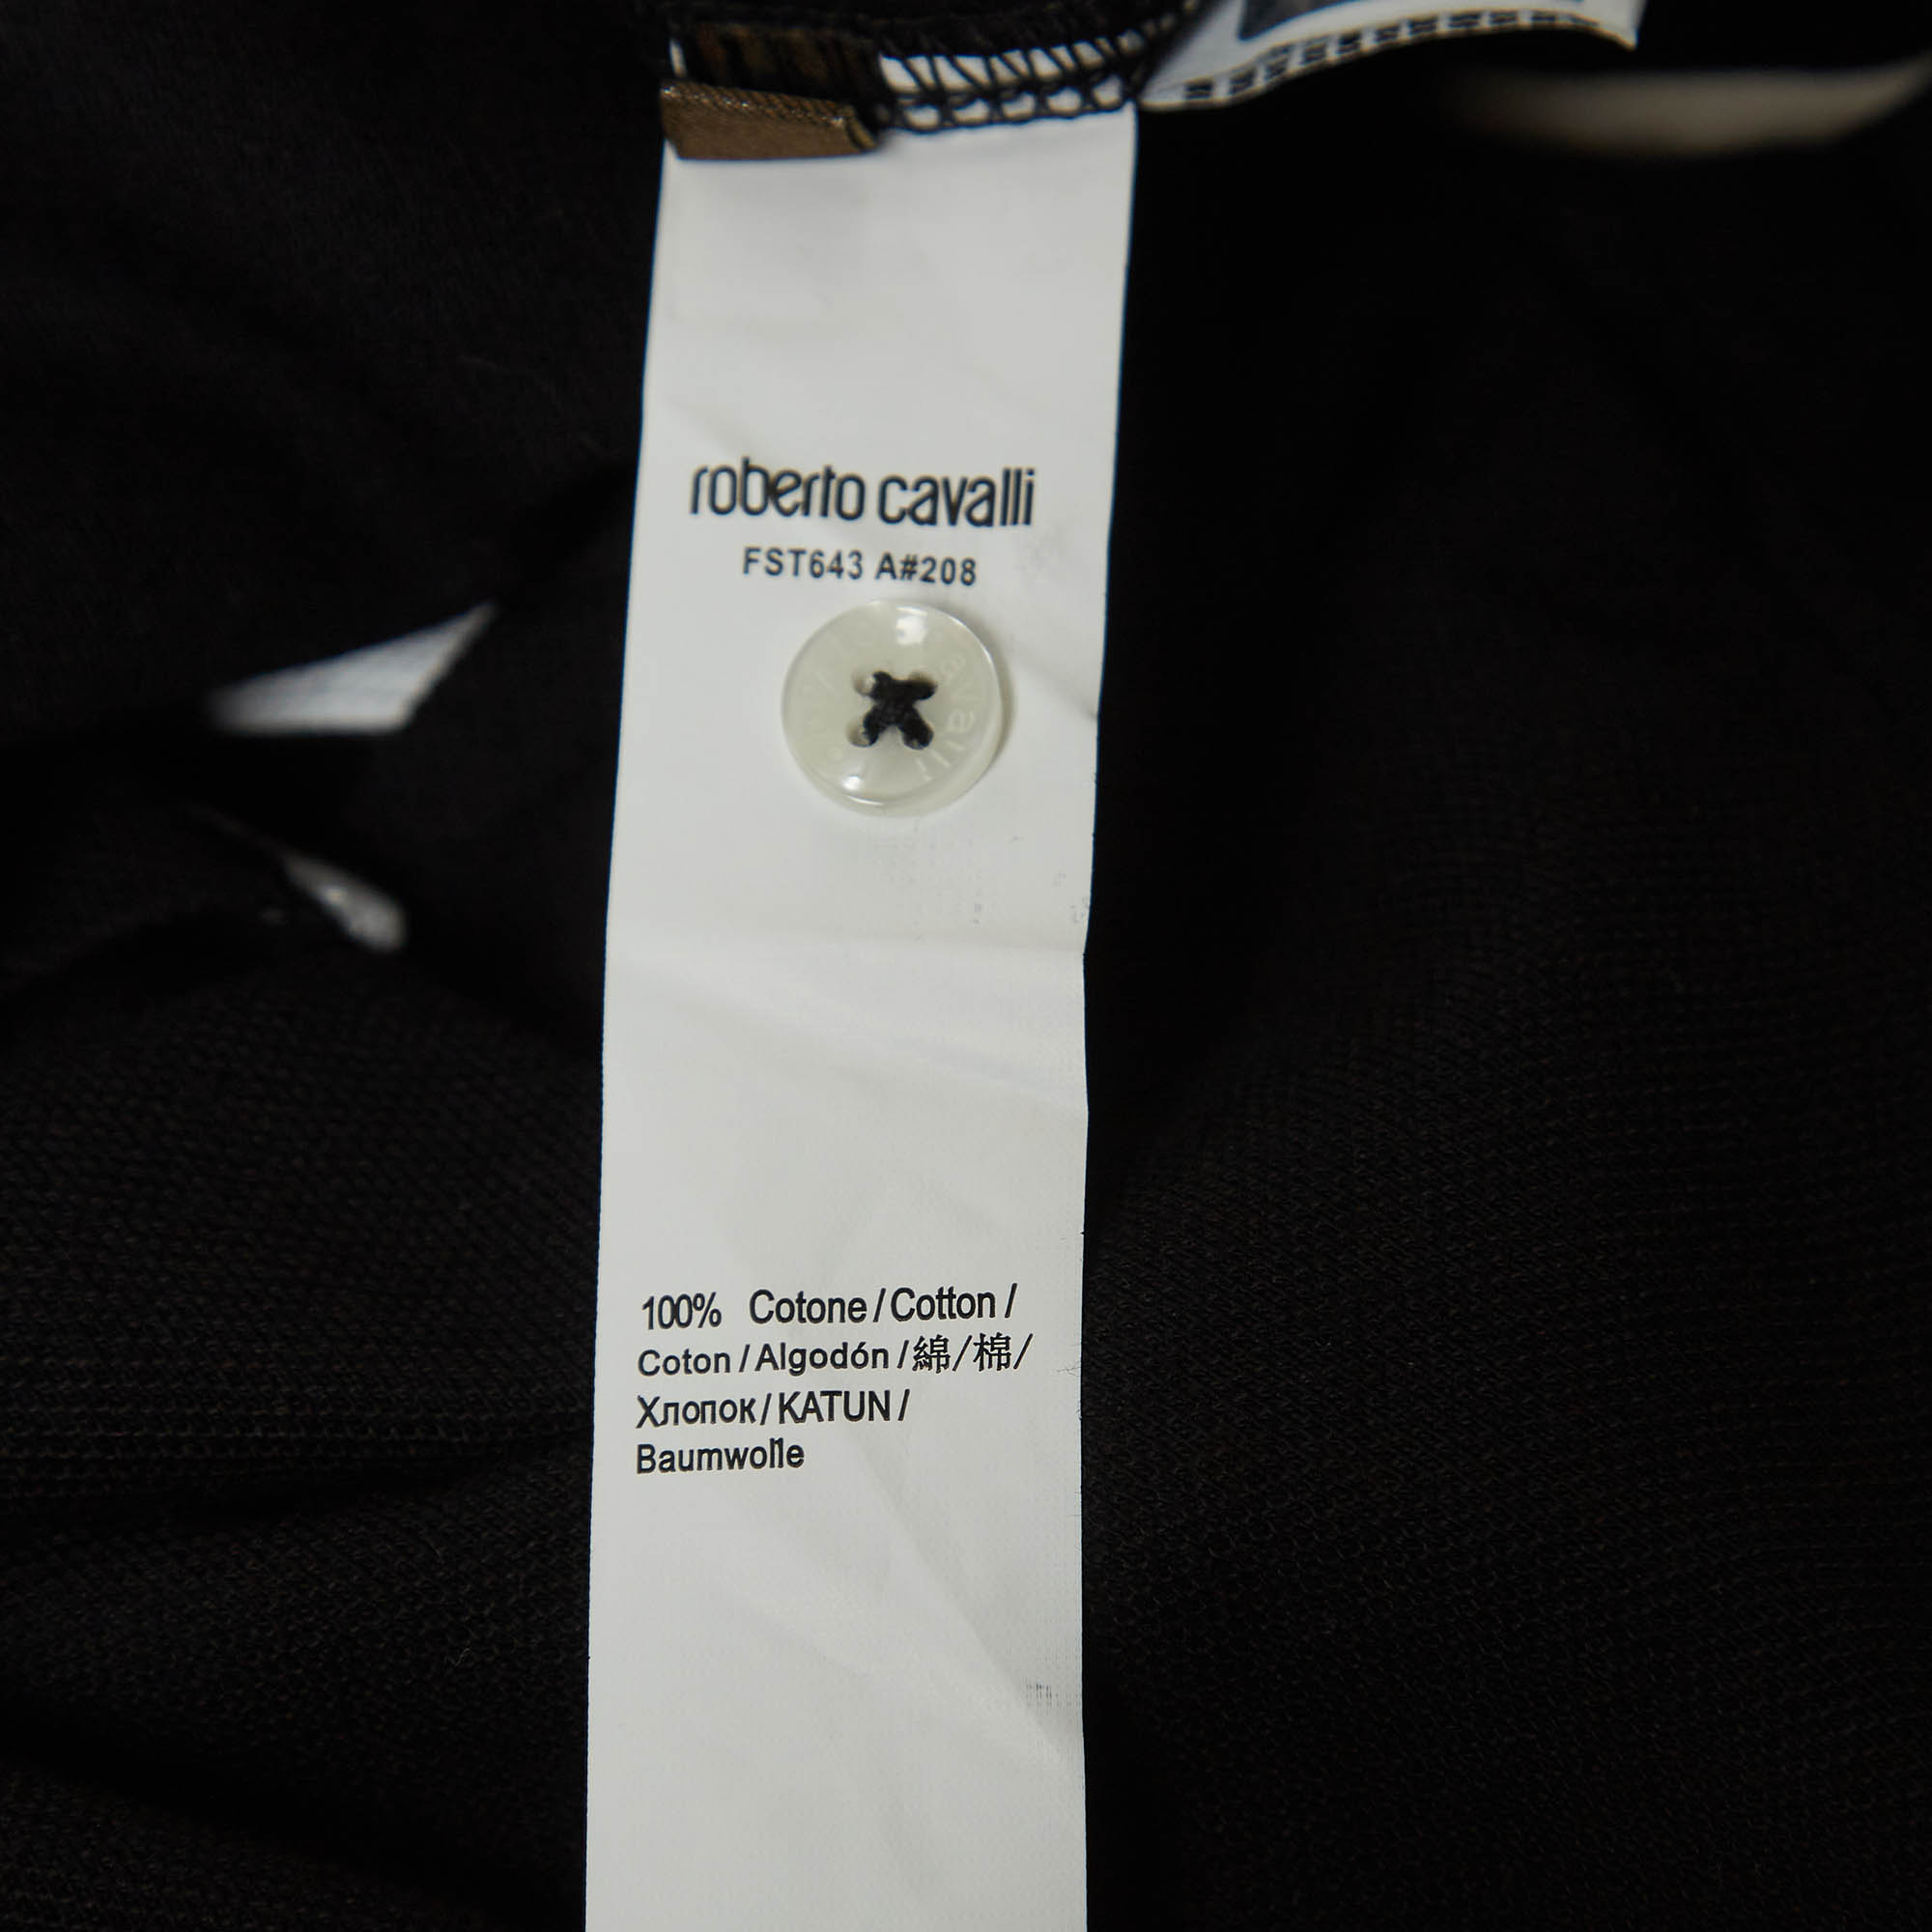 Roberto Cavalli Black Logo Embroidered Cotton Pique Polo T-Shirt L